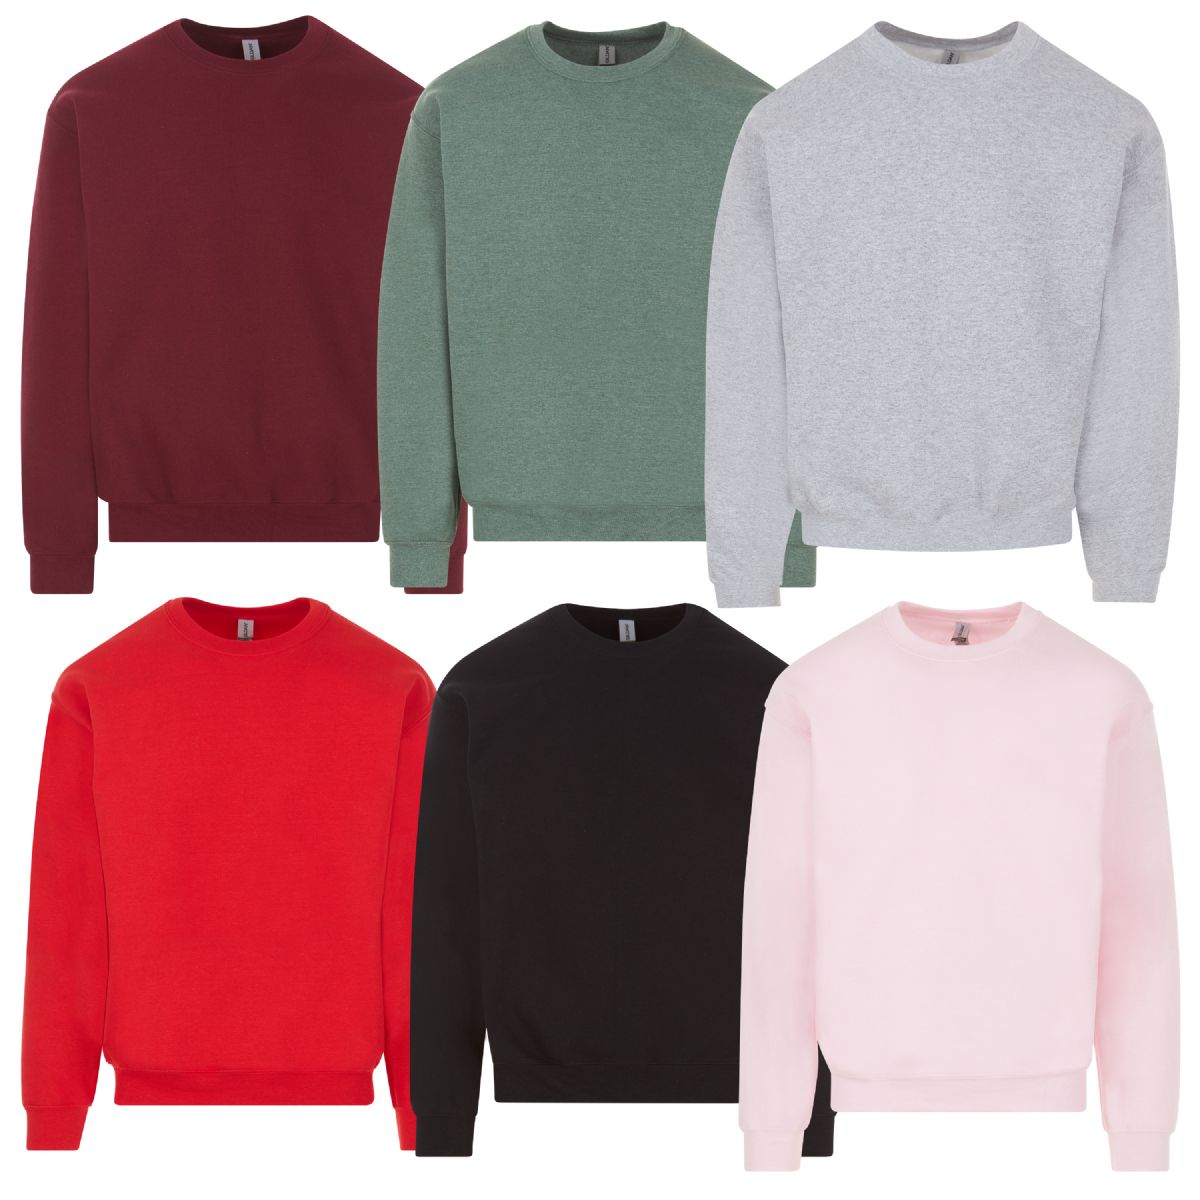 12 Pieces of Gildan Unisex Assorted Colors Fleece Sweat Shirts Size 3xlarge